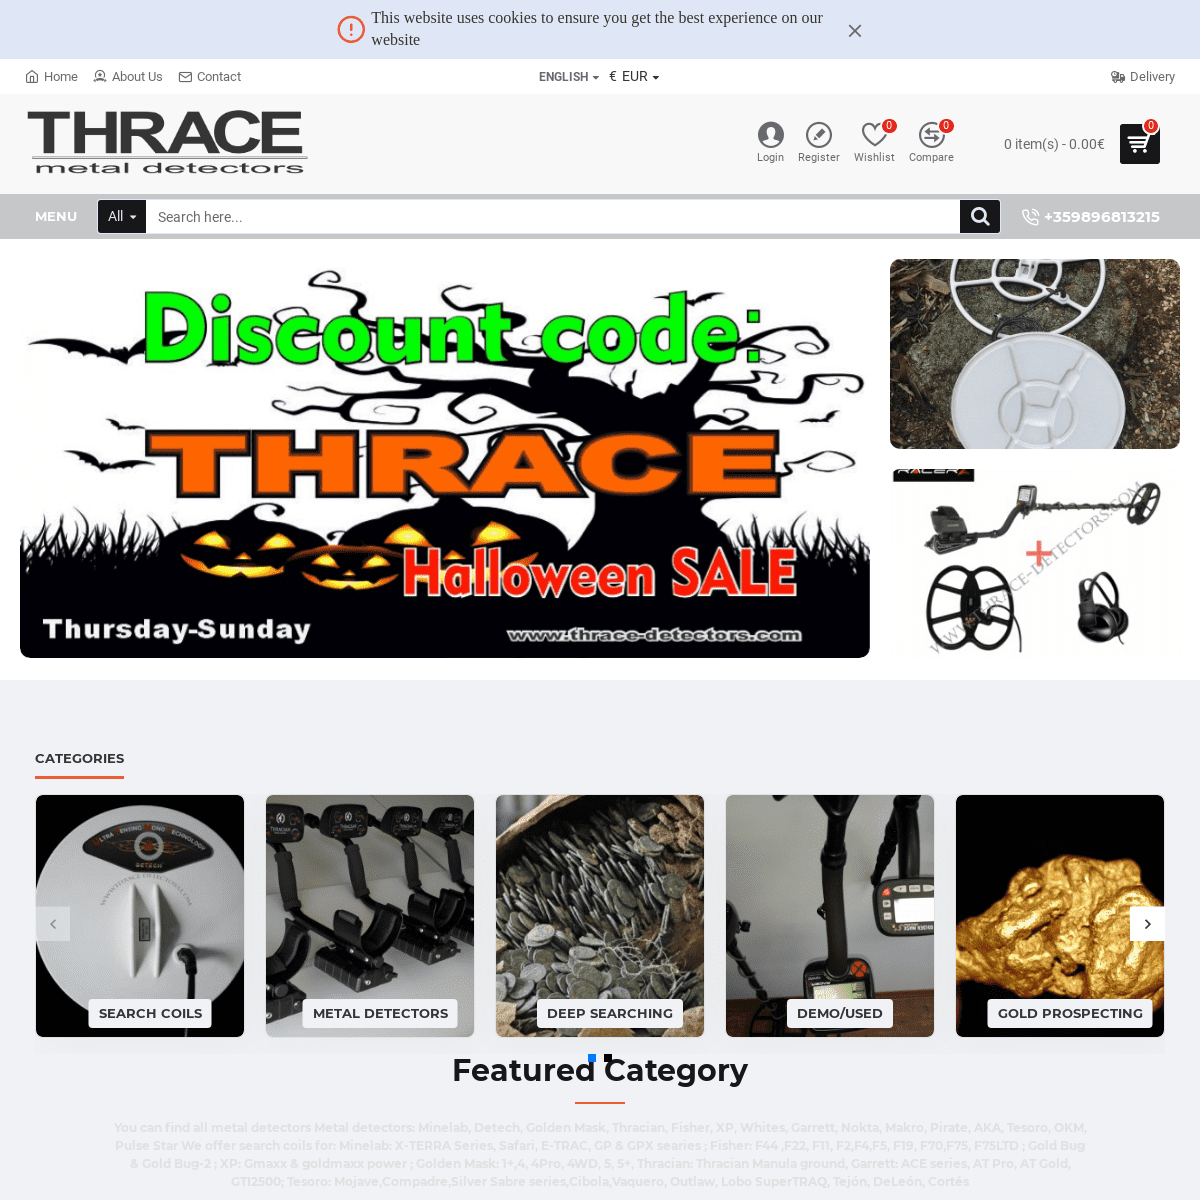 A complete backup of thrace-detectors.com